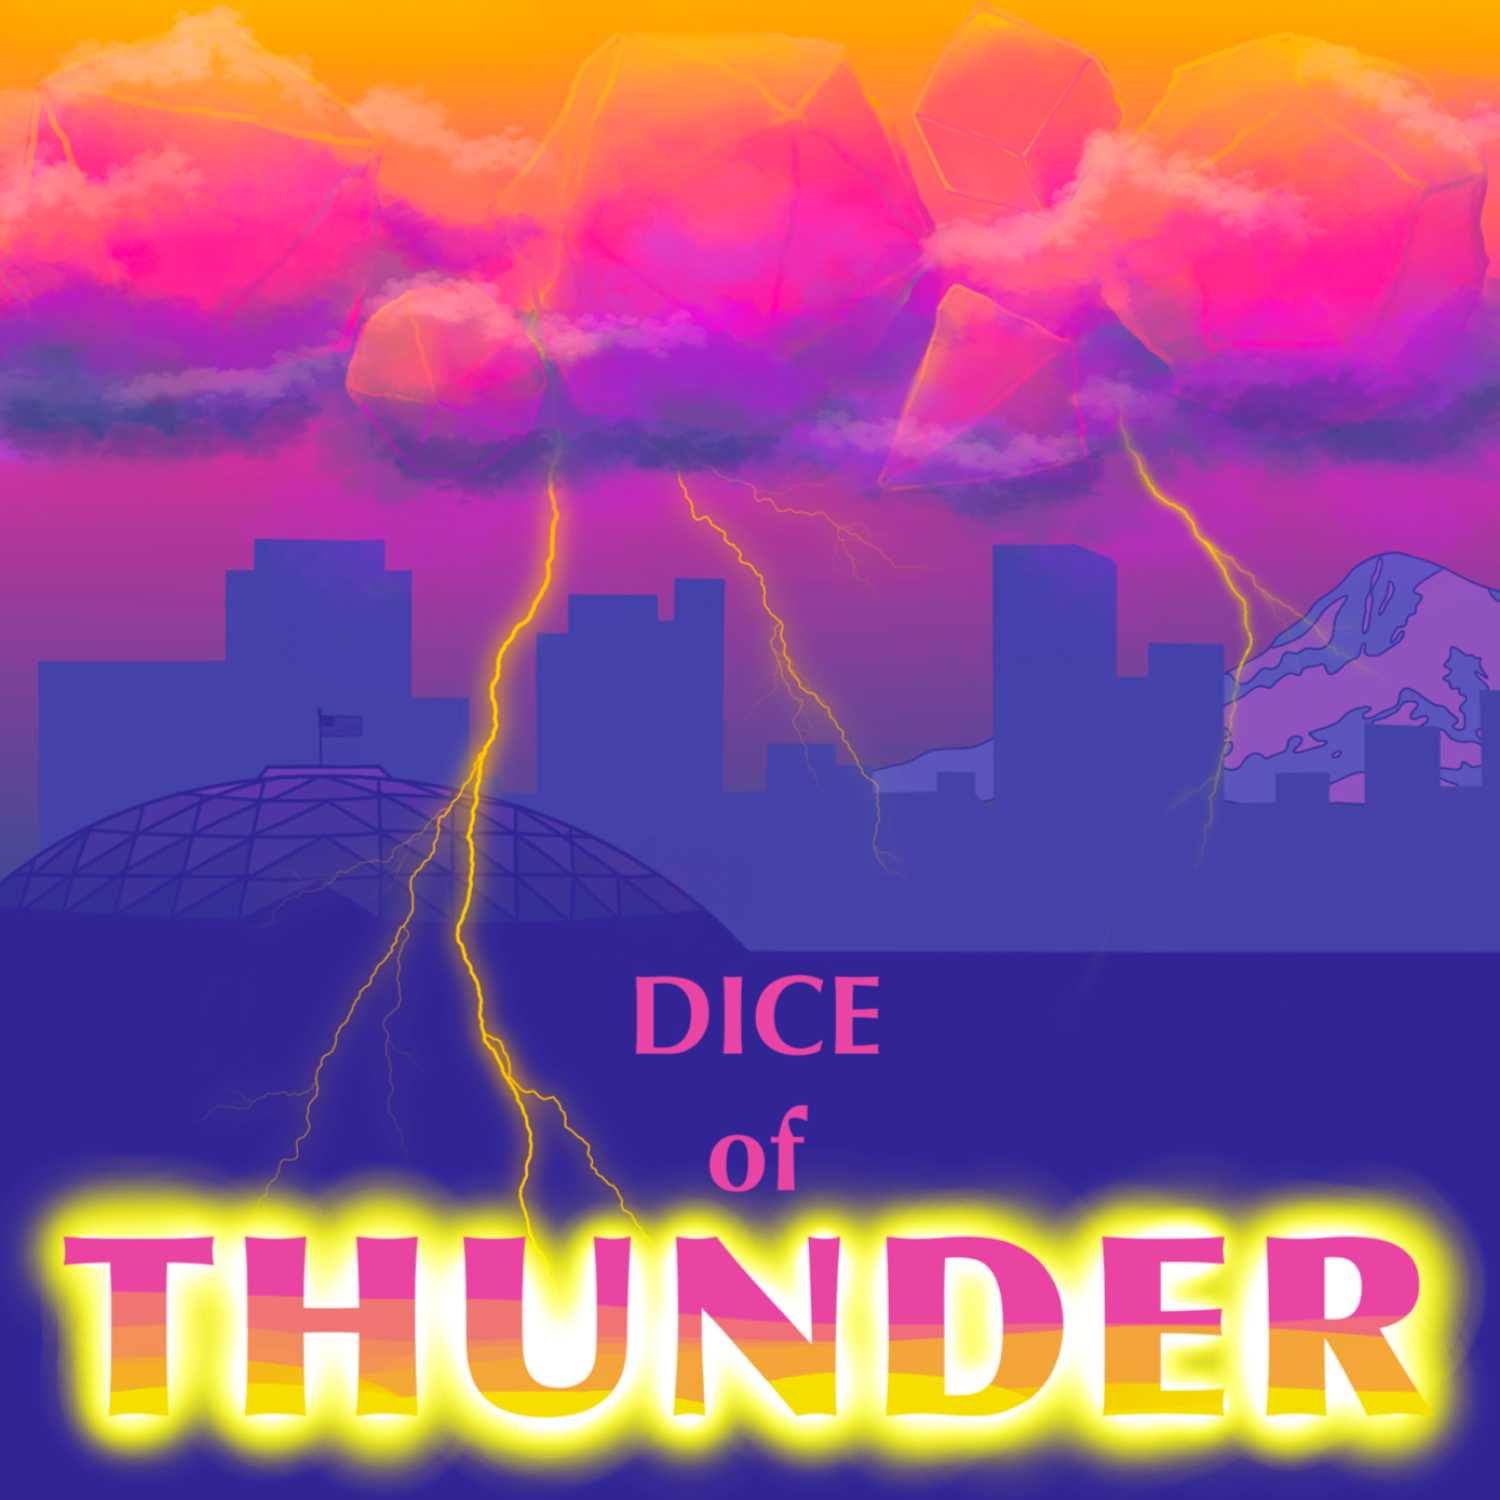 Dice of Thunder Podcast Trailer